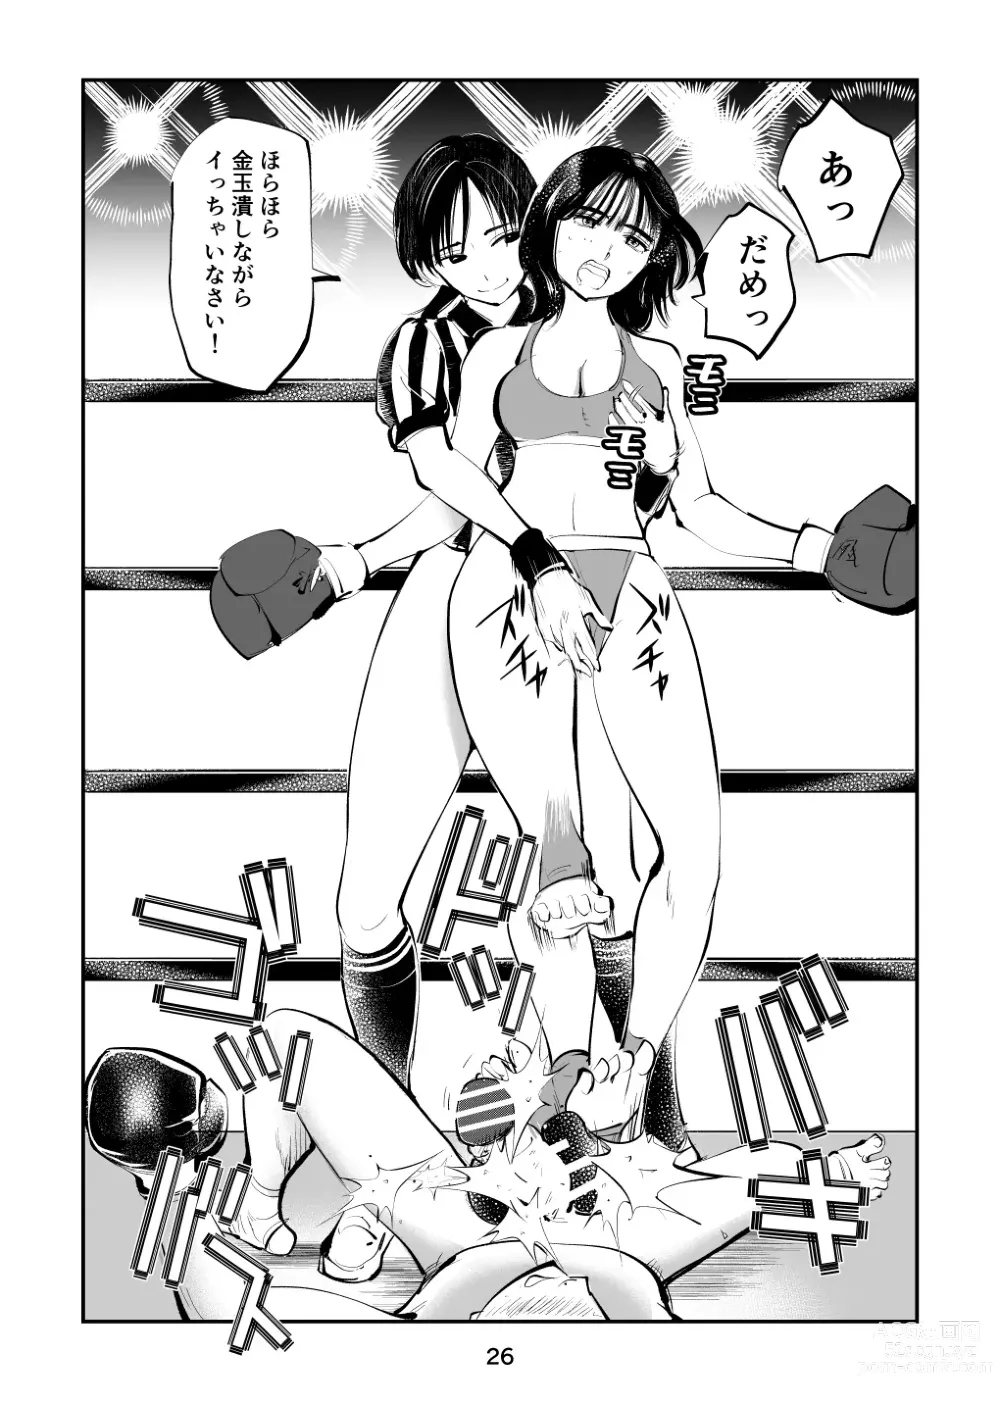 Page 26 of doujinshi Maso Boko Kickboxing 2